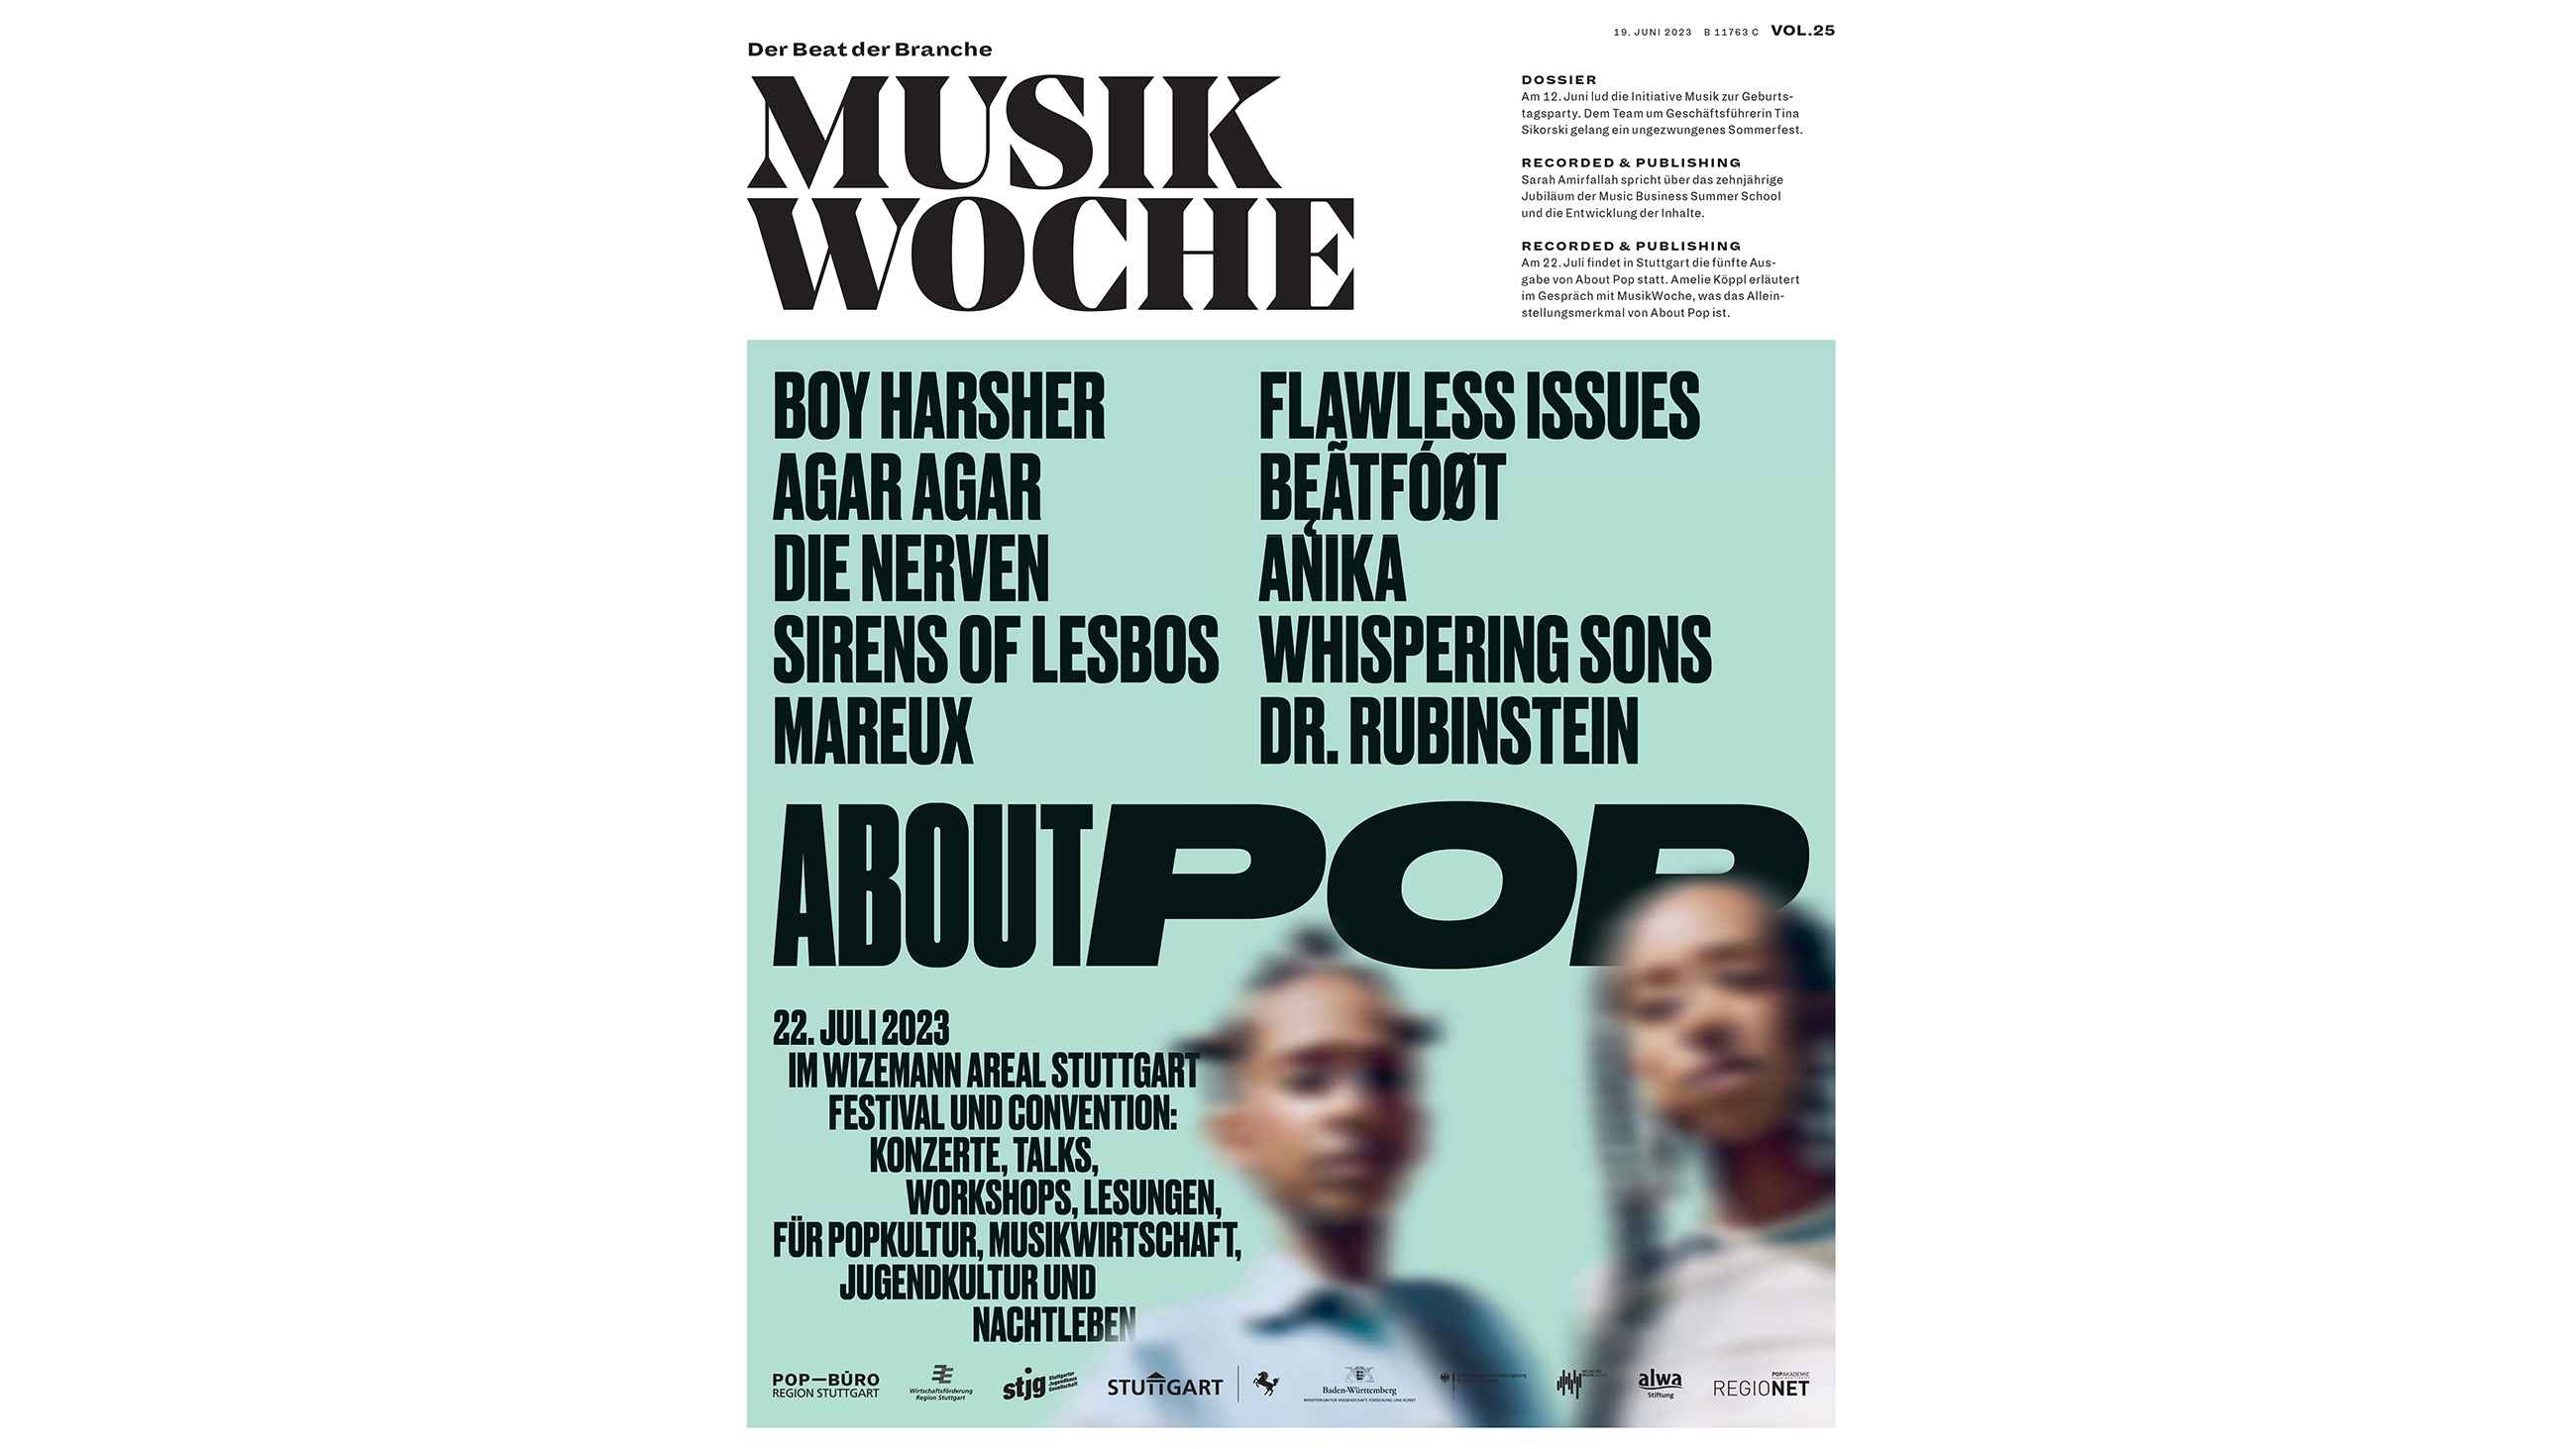 MusikWoche Vol. 25/2023